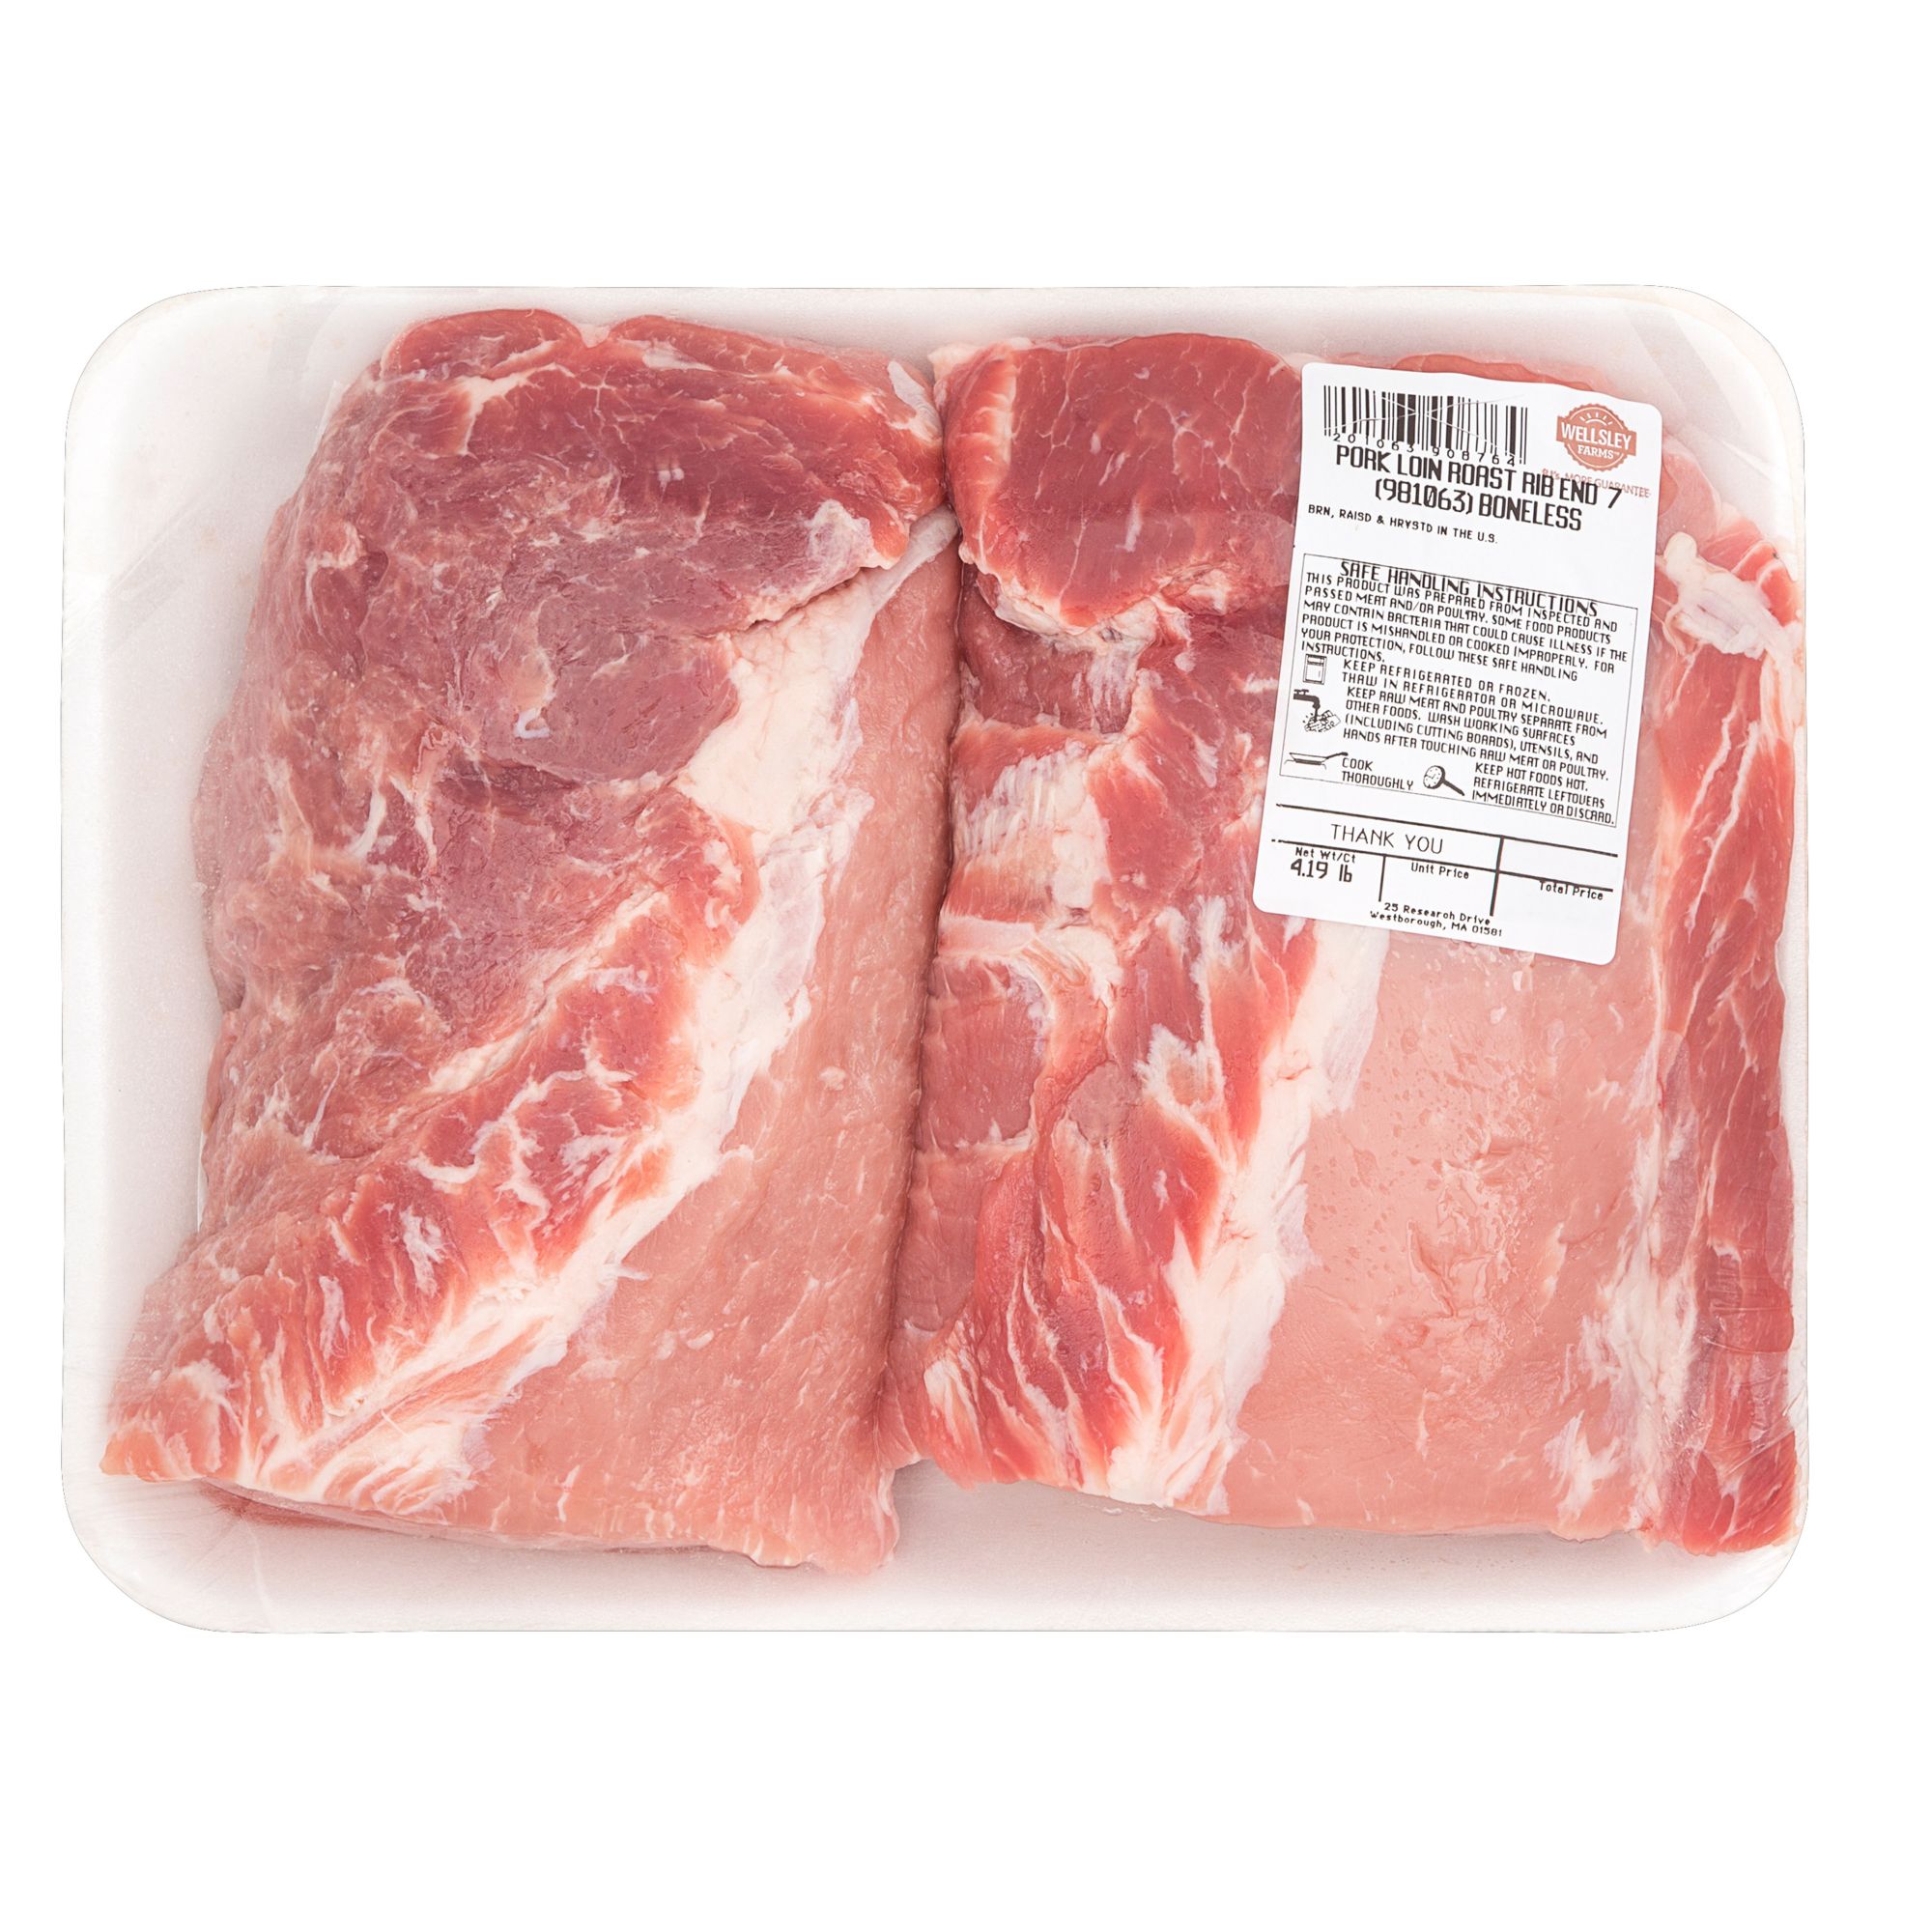 Wellsley Farms Fresh Boneless Pork Loin Rib End Roast, 3.75 - 4.5 lbs.